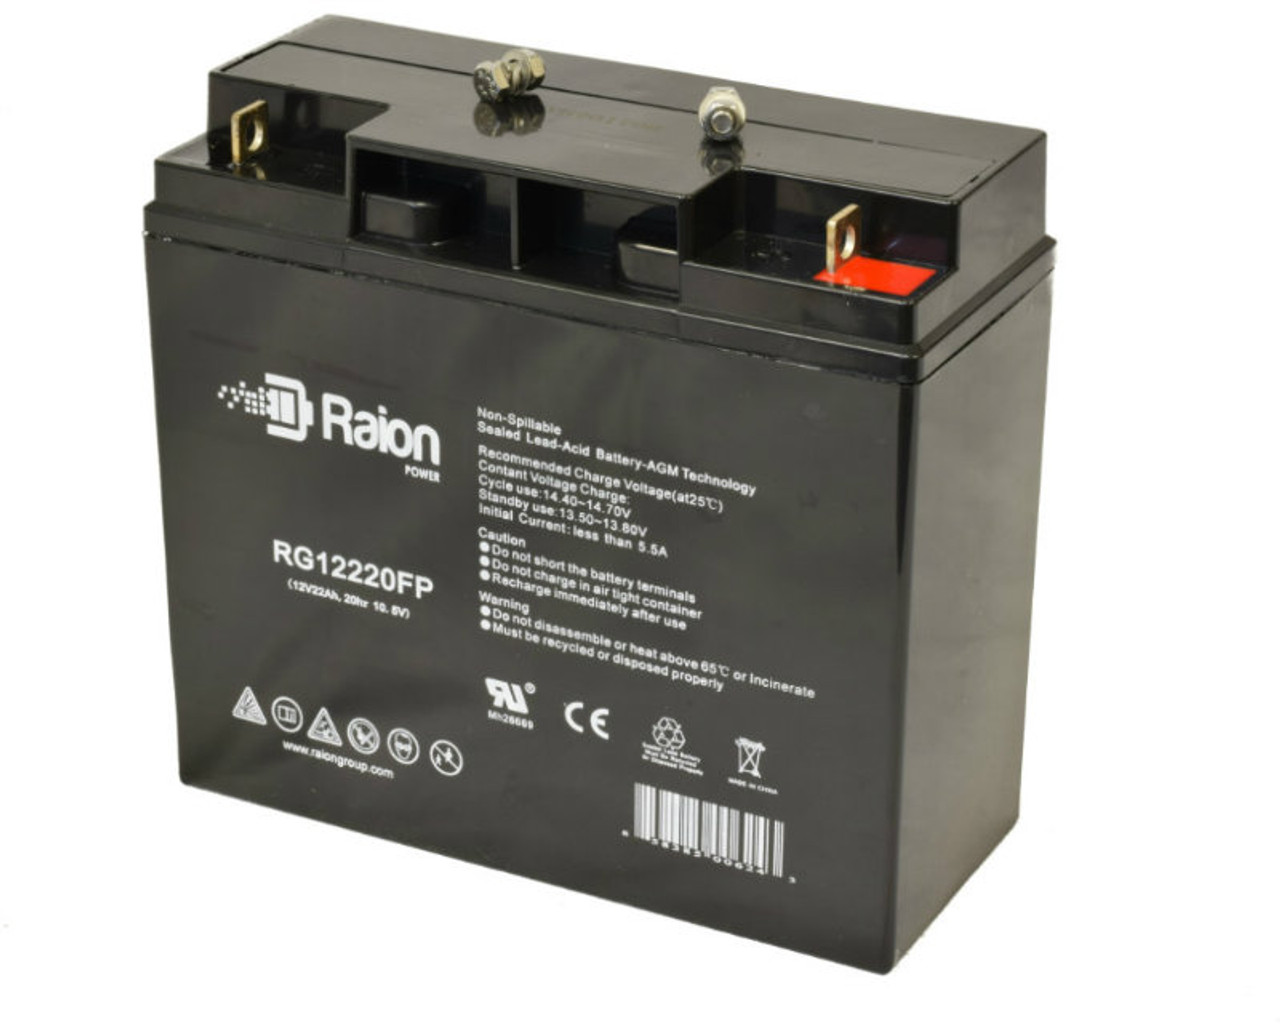 Raion Power RG12220FP 12V 22Ah Lead Acid Battery for Cal-Van Tools DXL-557 Allstart Pro Series Jump Starter